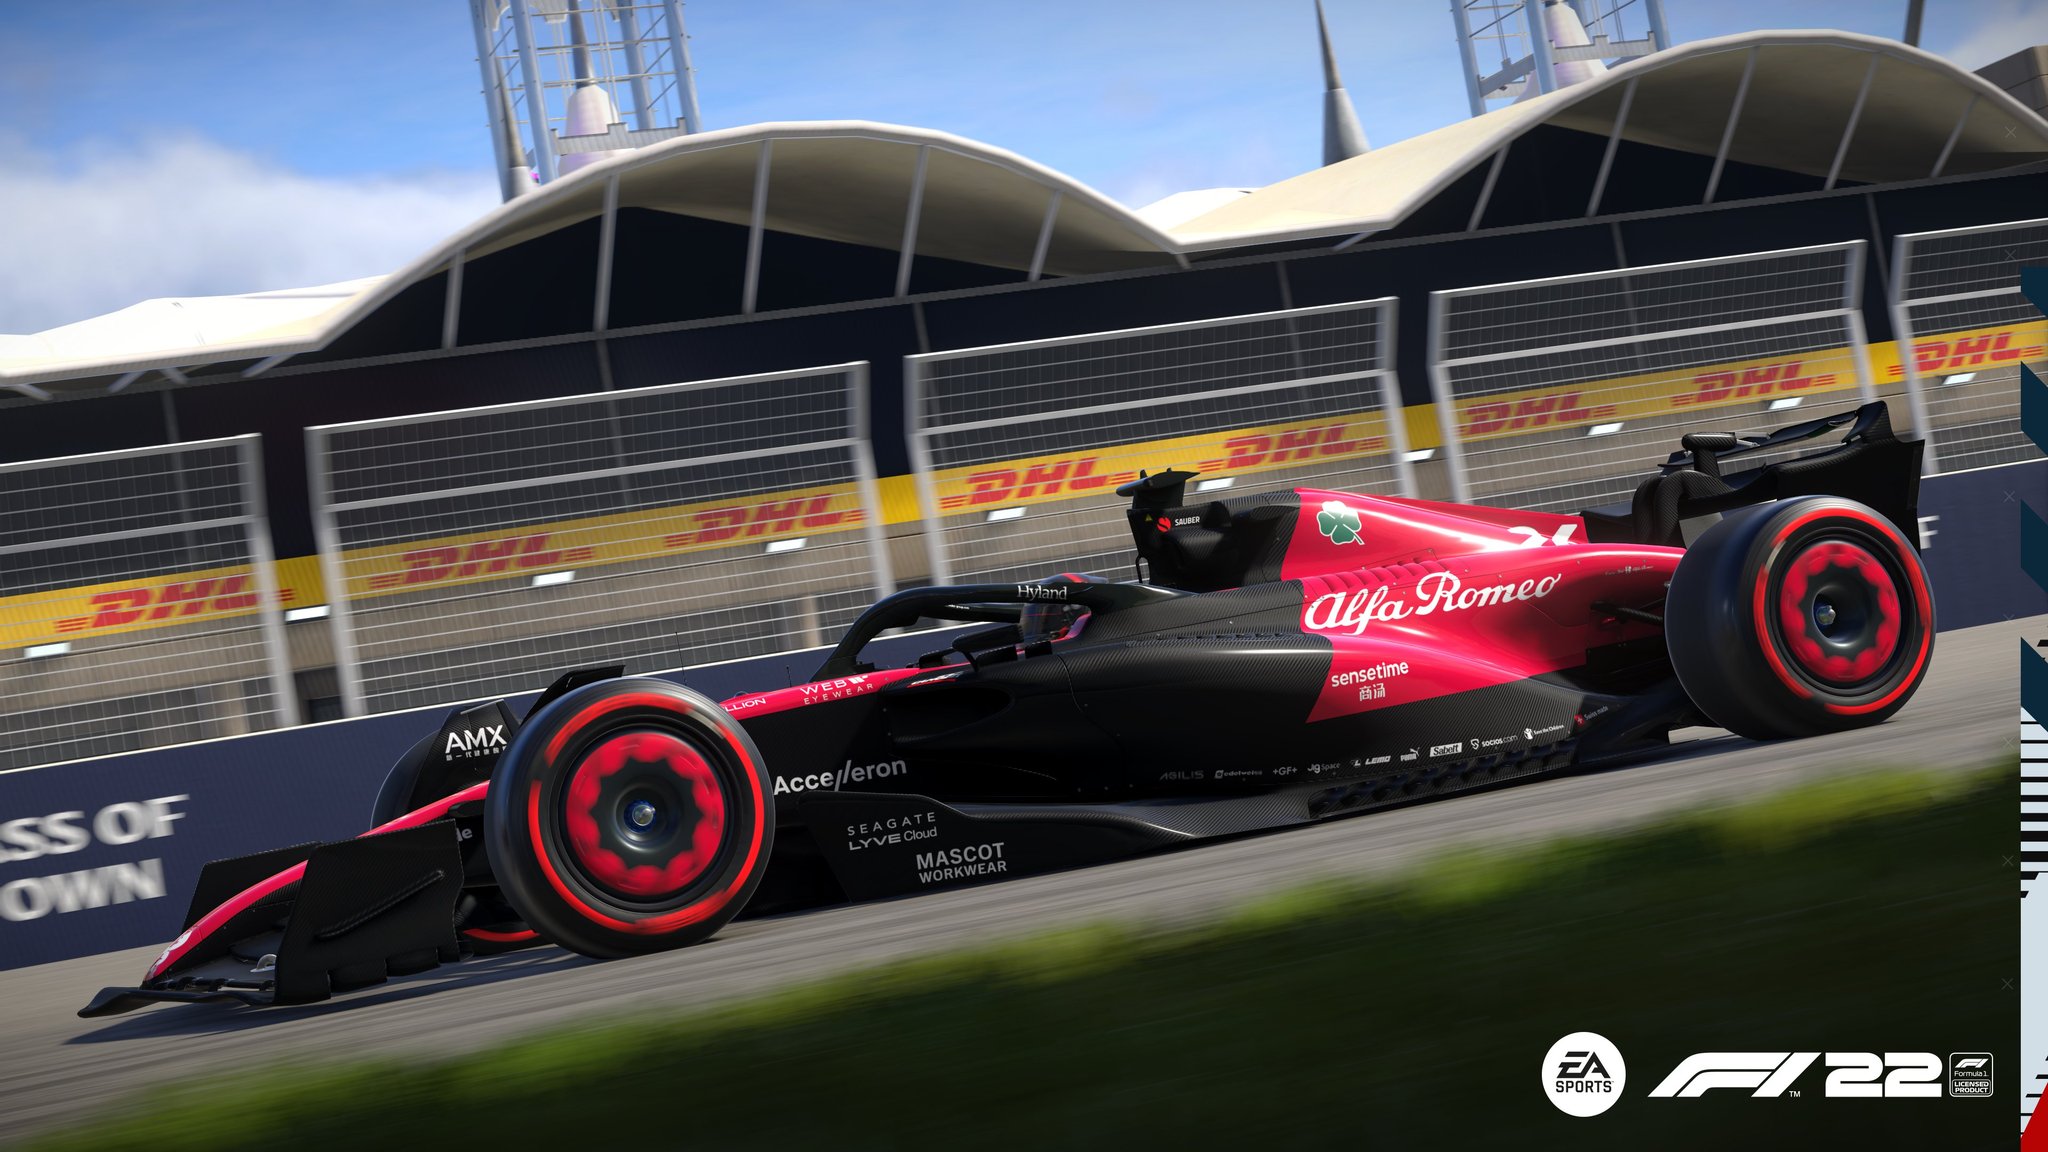 Alfa Romeo adds its 2023 season livery to EA Sports F1 22